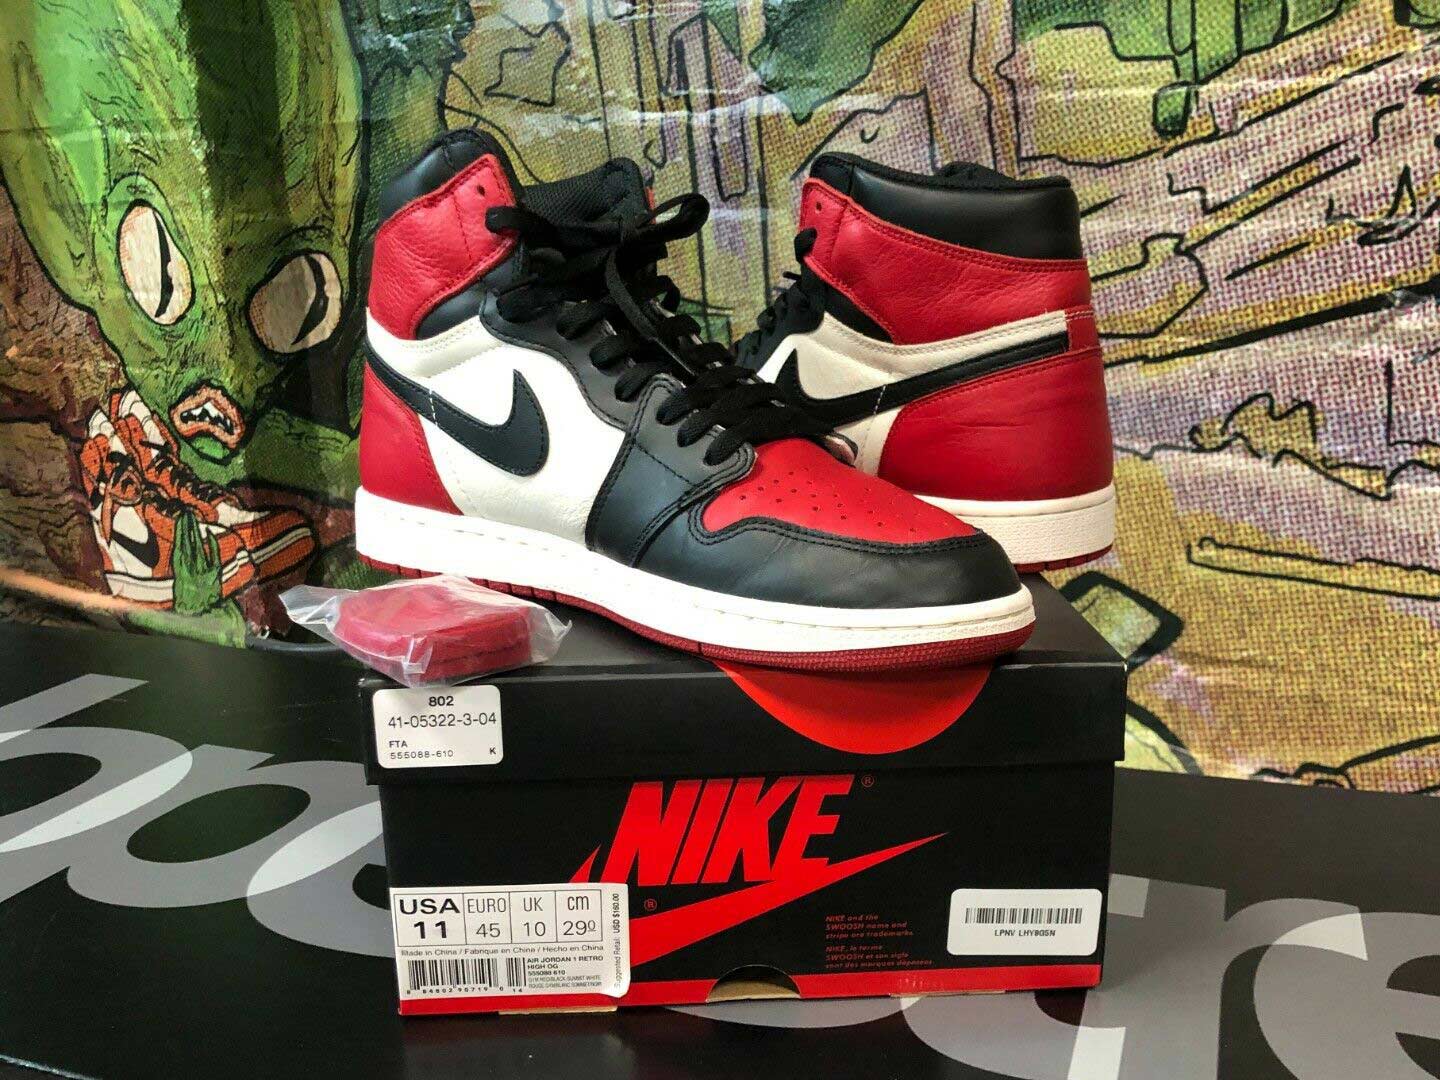 Nike Air Jordan 1 High OG "Bred Toe" at DopeStreetShoes